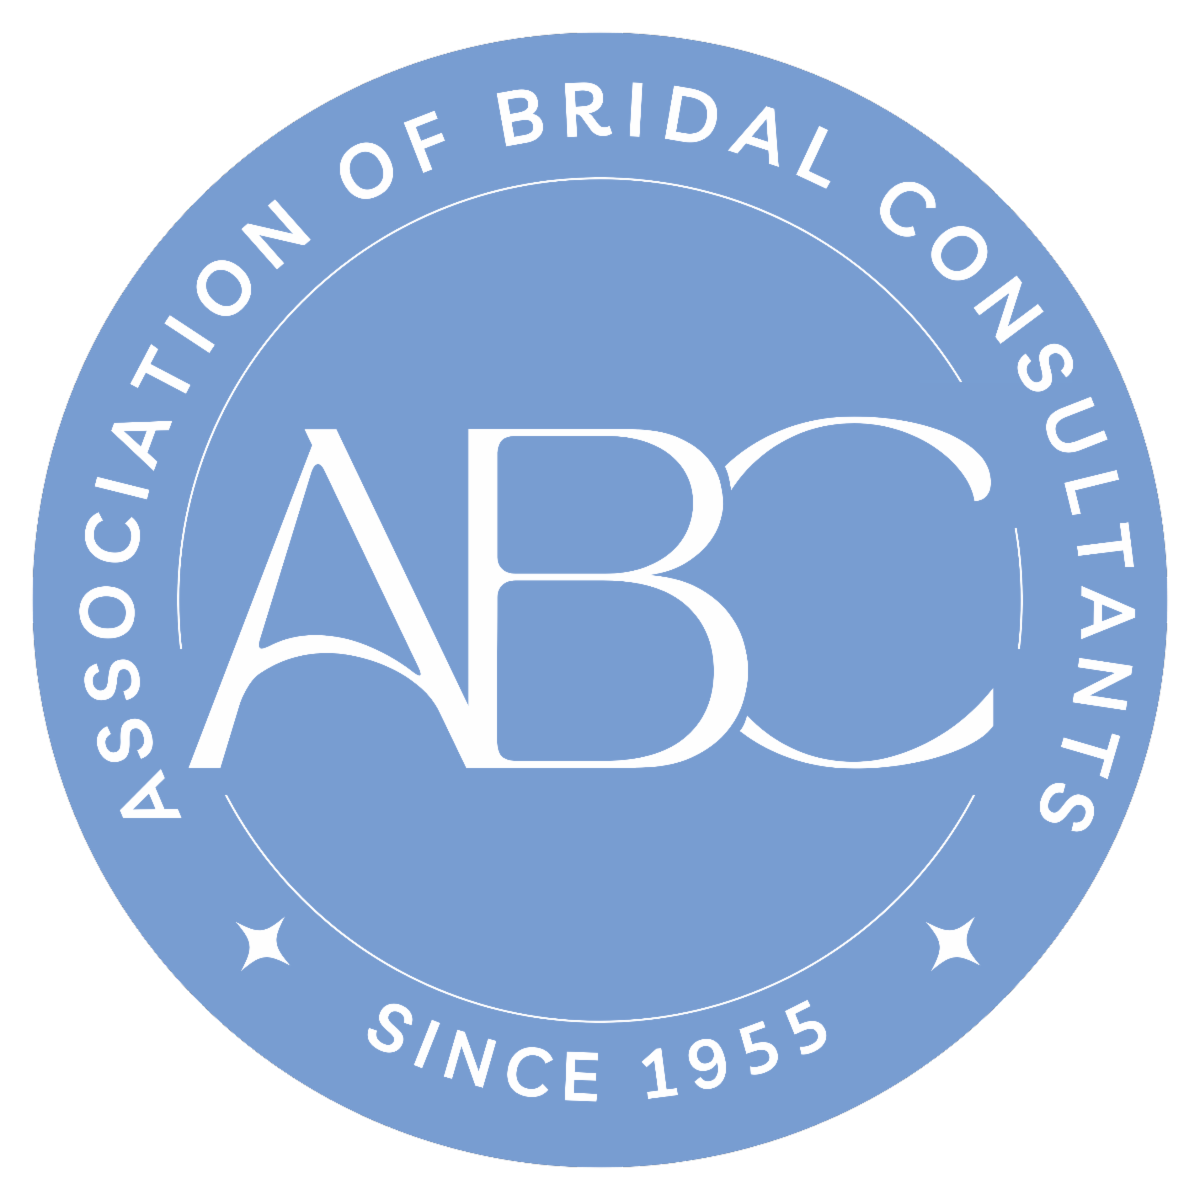 ABC Logo.png